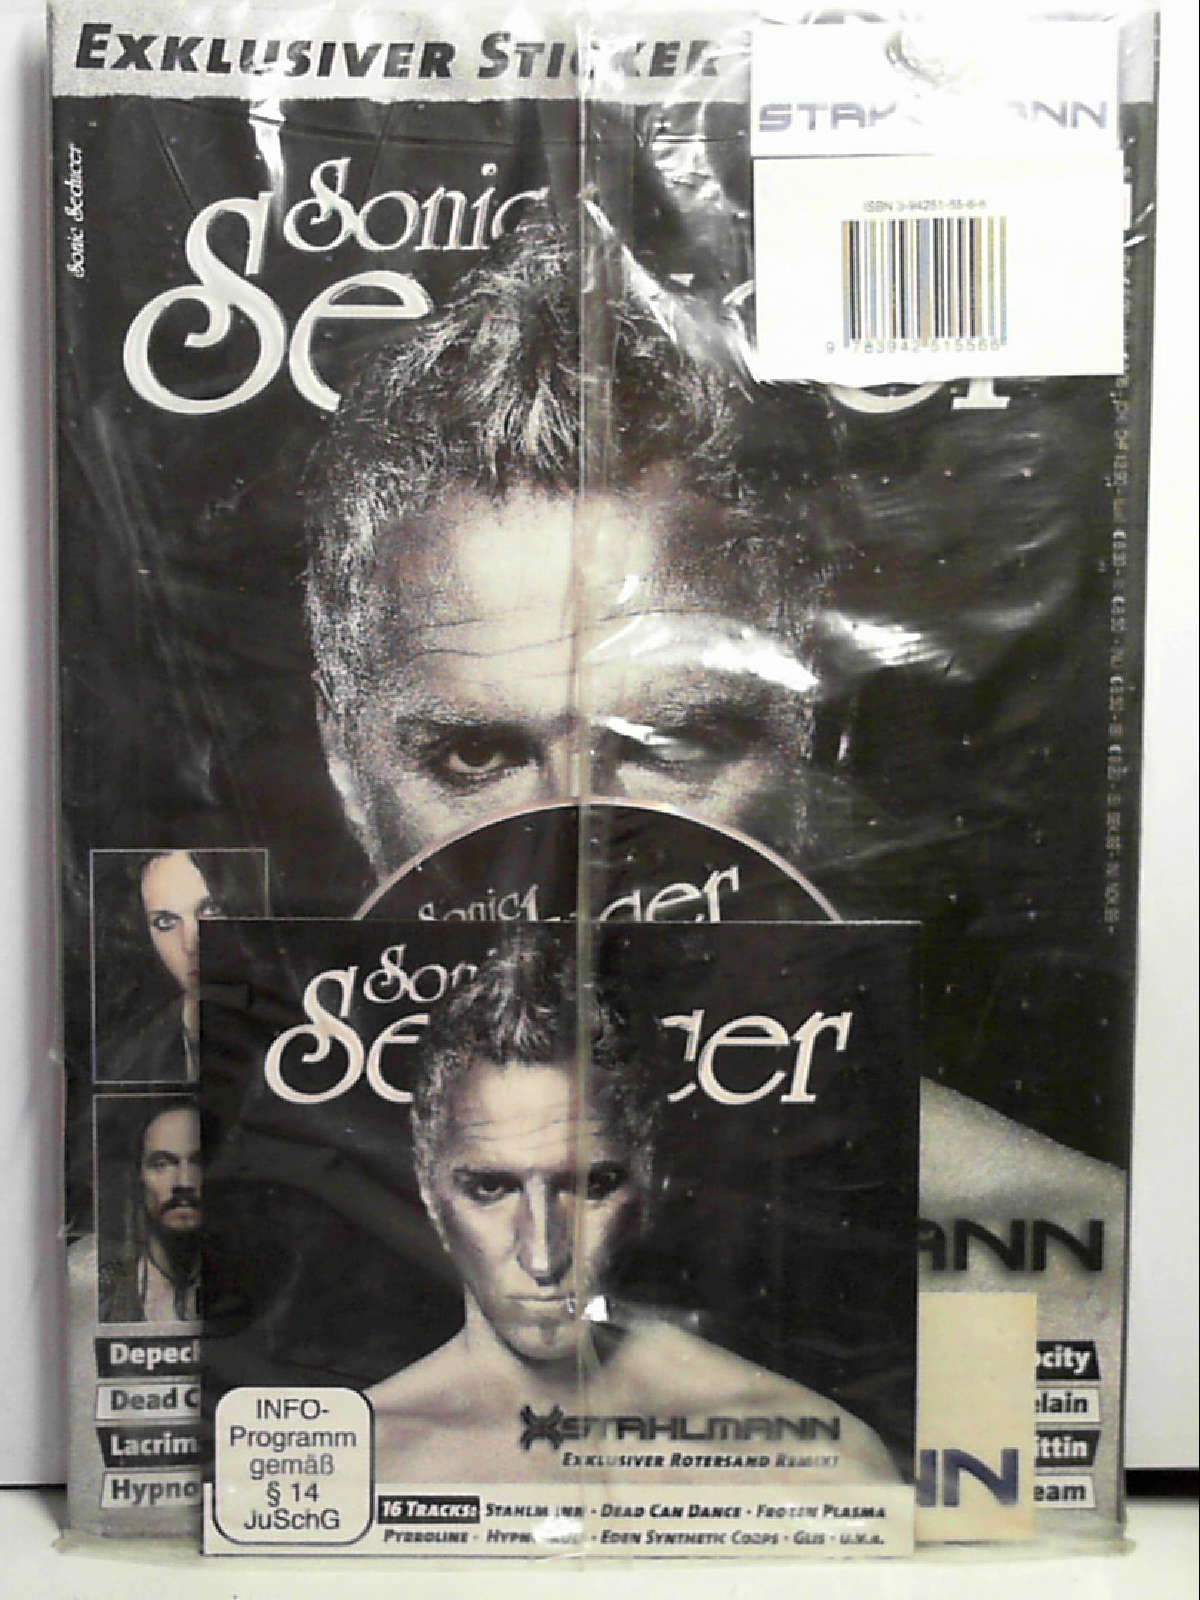 Sonic Seducer 05-13 mit Stahlmann-Titelstory + CD + exkl. Sticker von Stahlmann, Bands: Depeche Mode, Dead Can Dance, HIM, Rob Zombie, Deine Lakaien, ... u.v.m.: + CD + exkl. Stahlmann-Sticker - Sonic Seducer